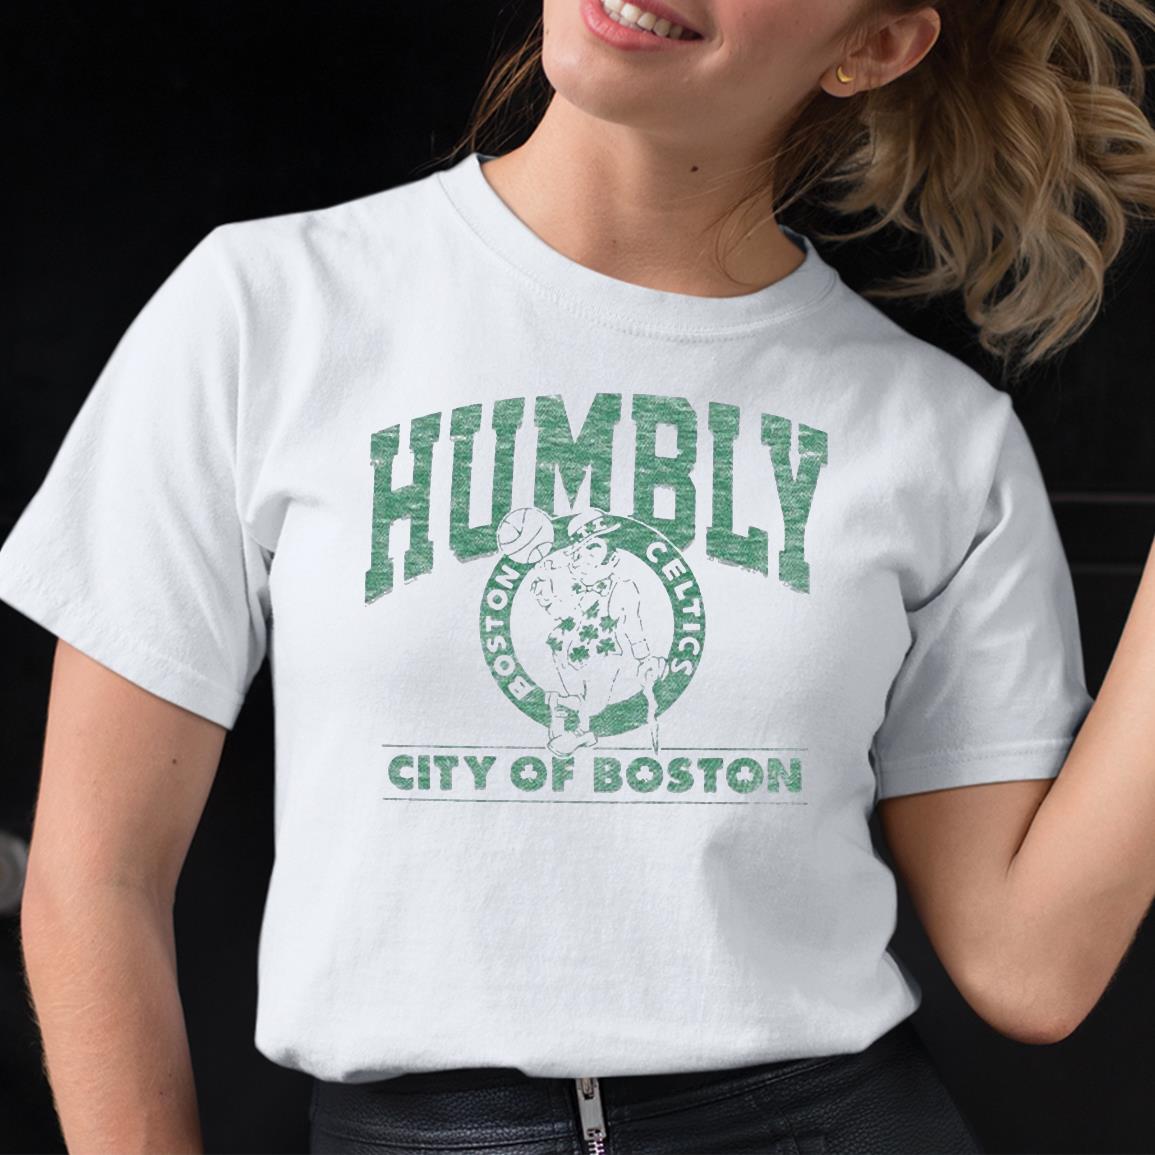 Jayson Tatum Boston Celtics Name & Number NBA T-Shirt - Green - Throwback